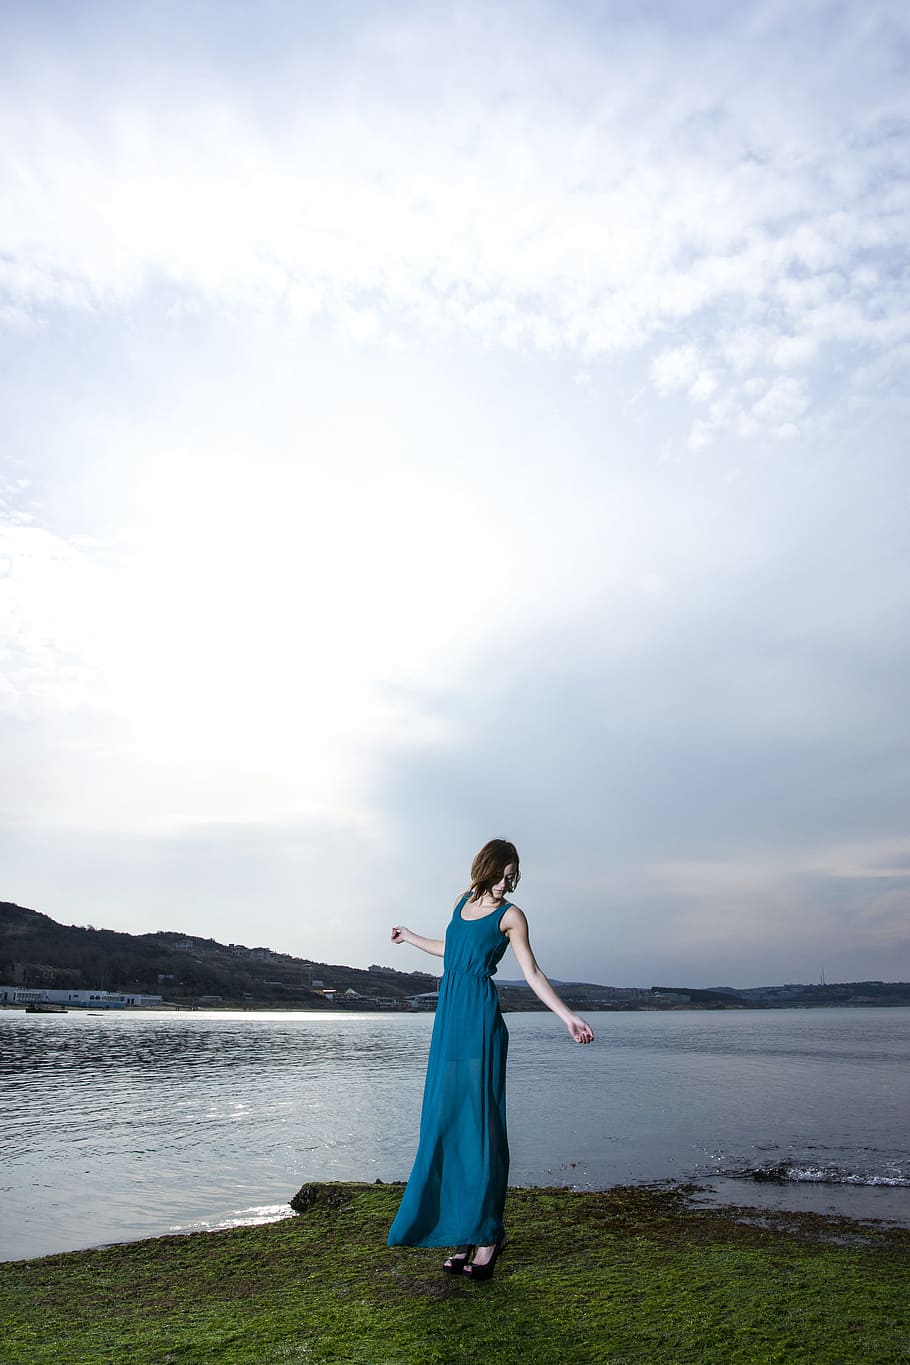 woman wearing teal sleeveless long dress standing on grass field near body of water